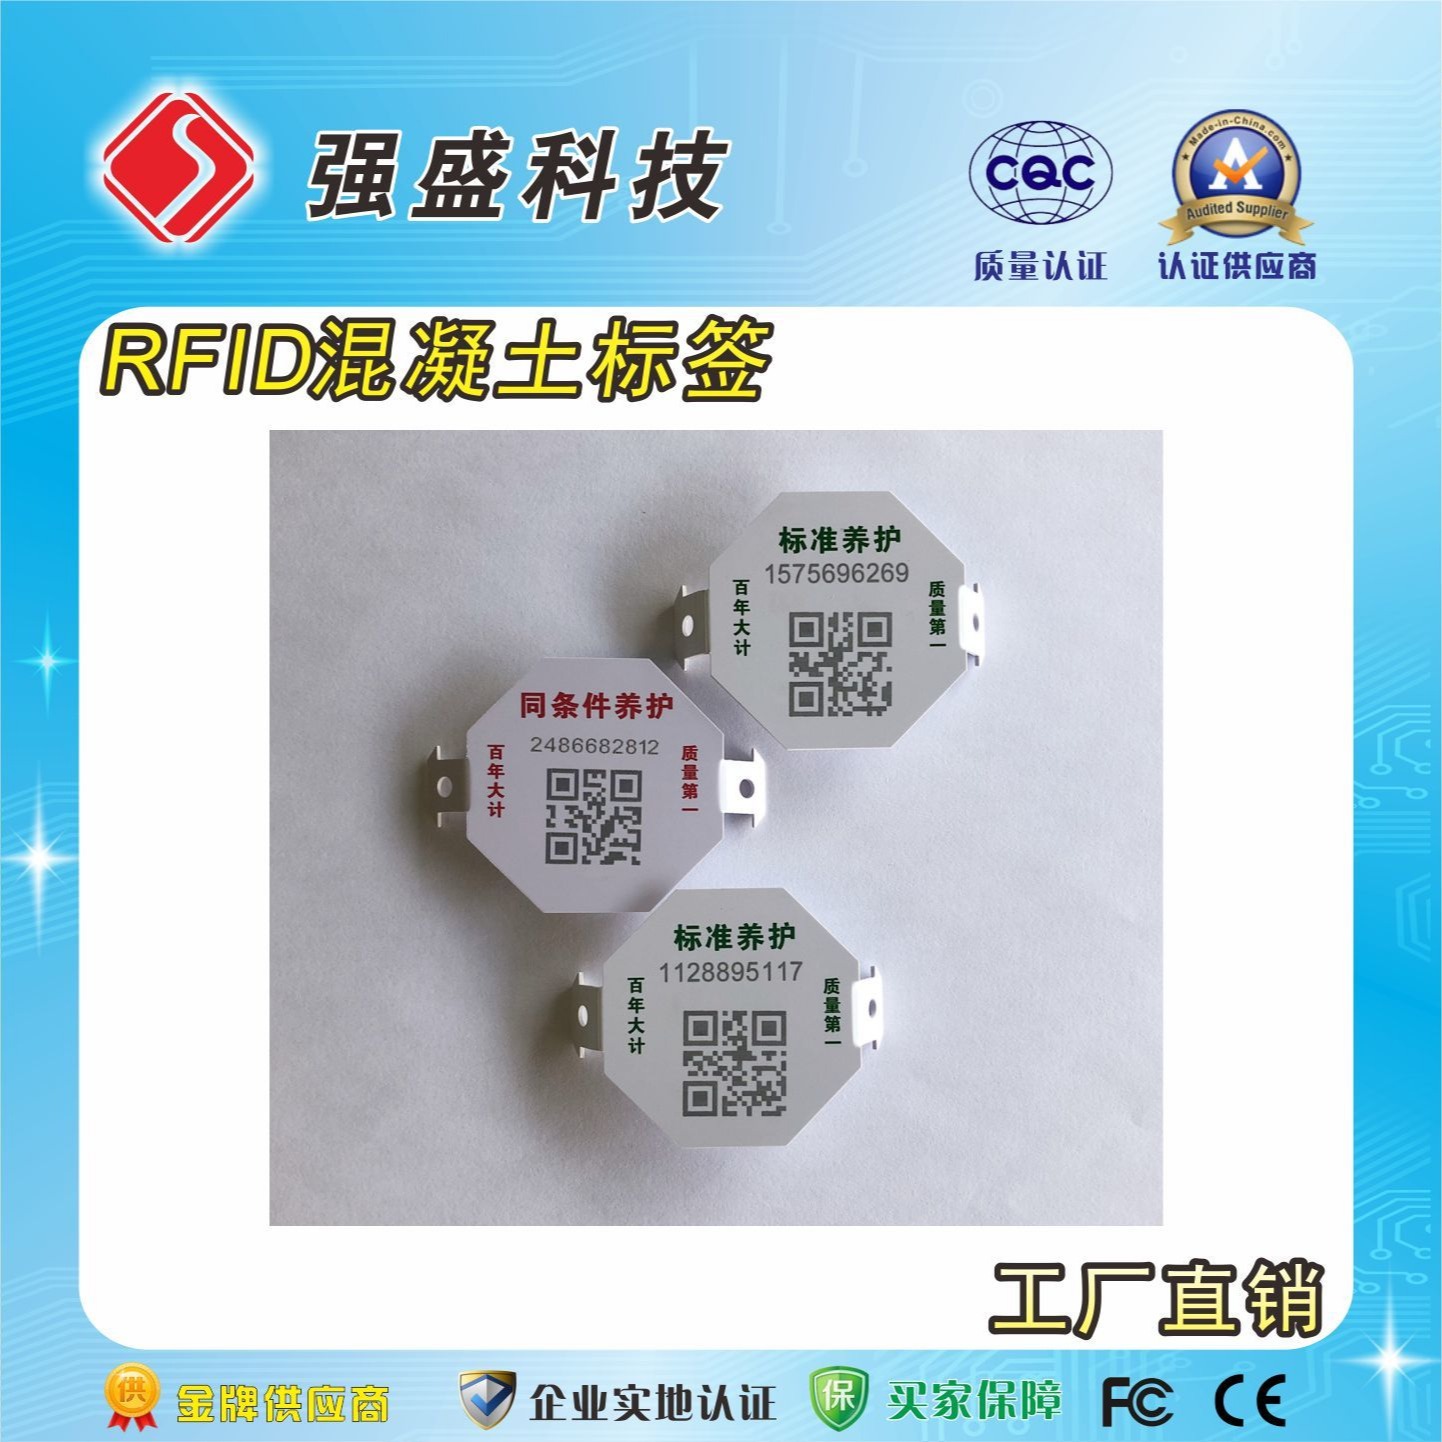 RFID混凝土电子标签价格 广州混凝土试块植入芯片供应商 水泥植入电子标签厂家10